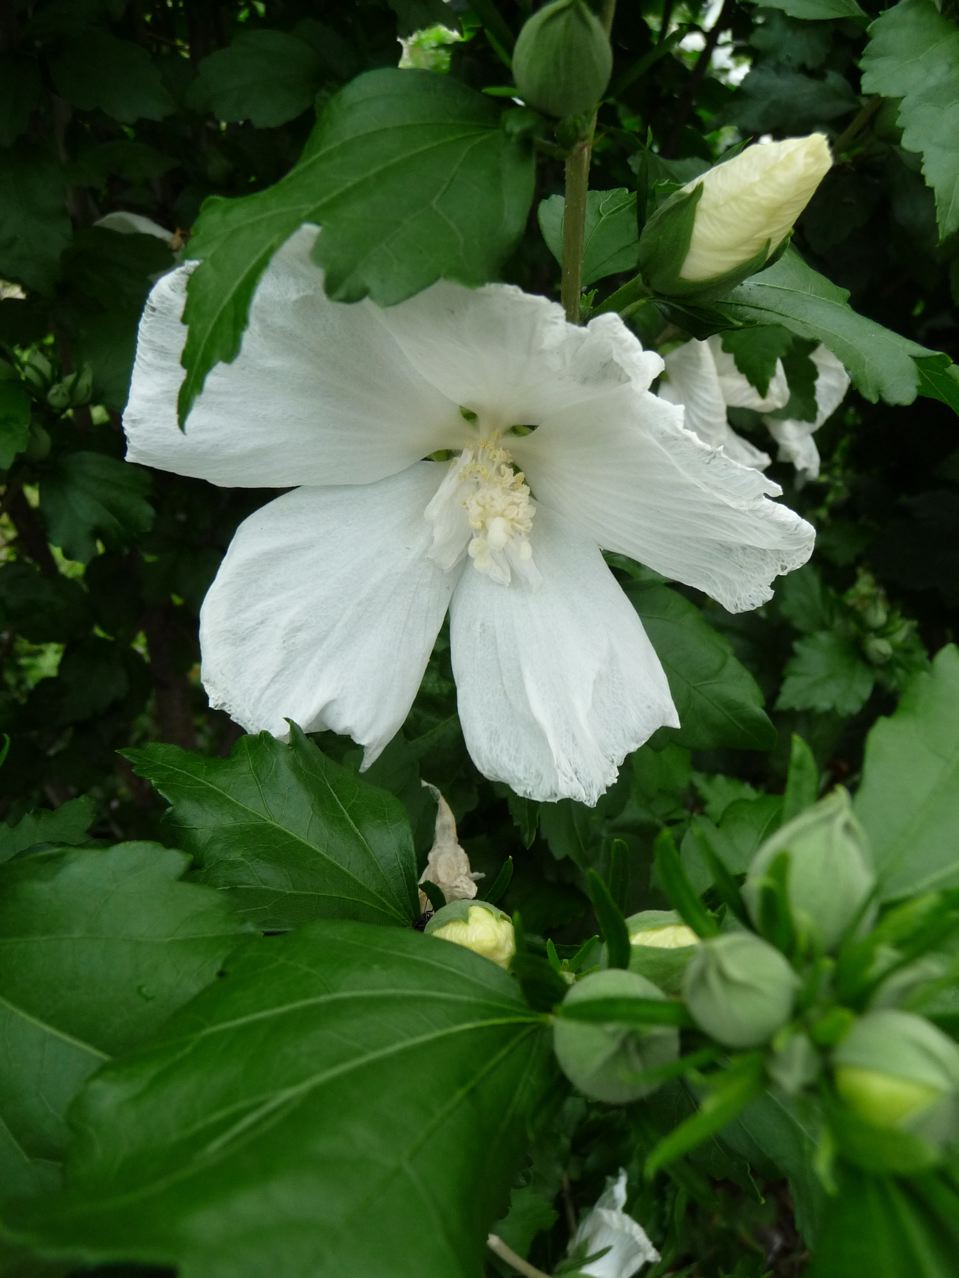 Arbuste a grosse fleur blanche